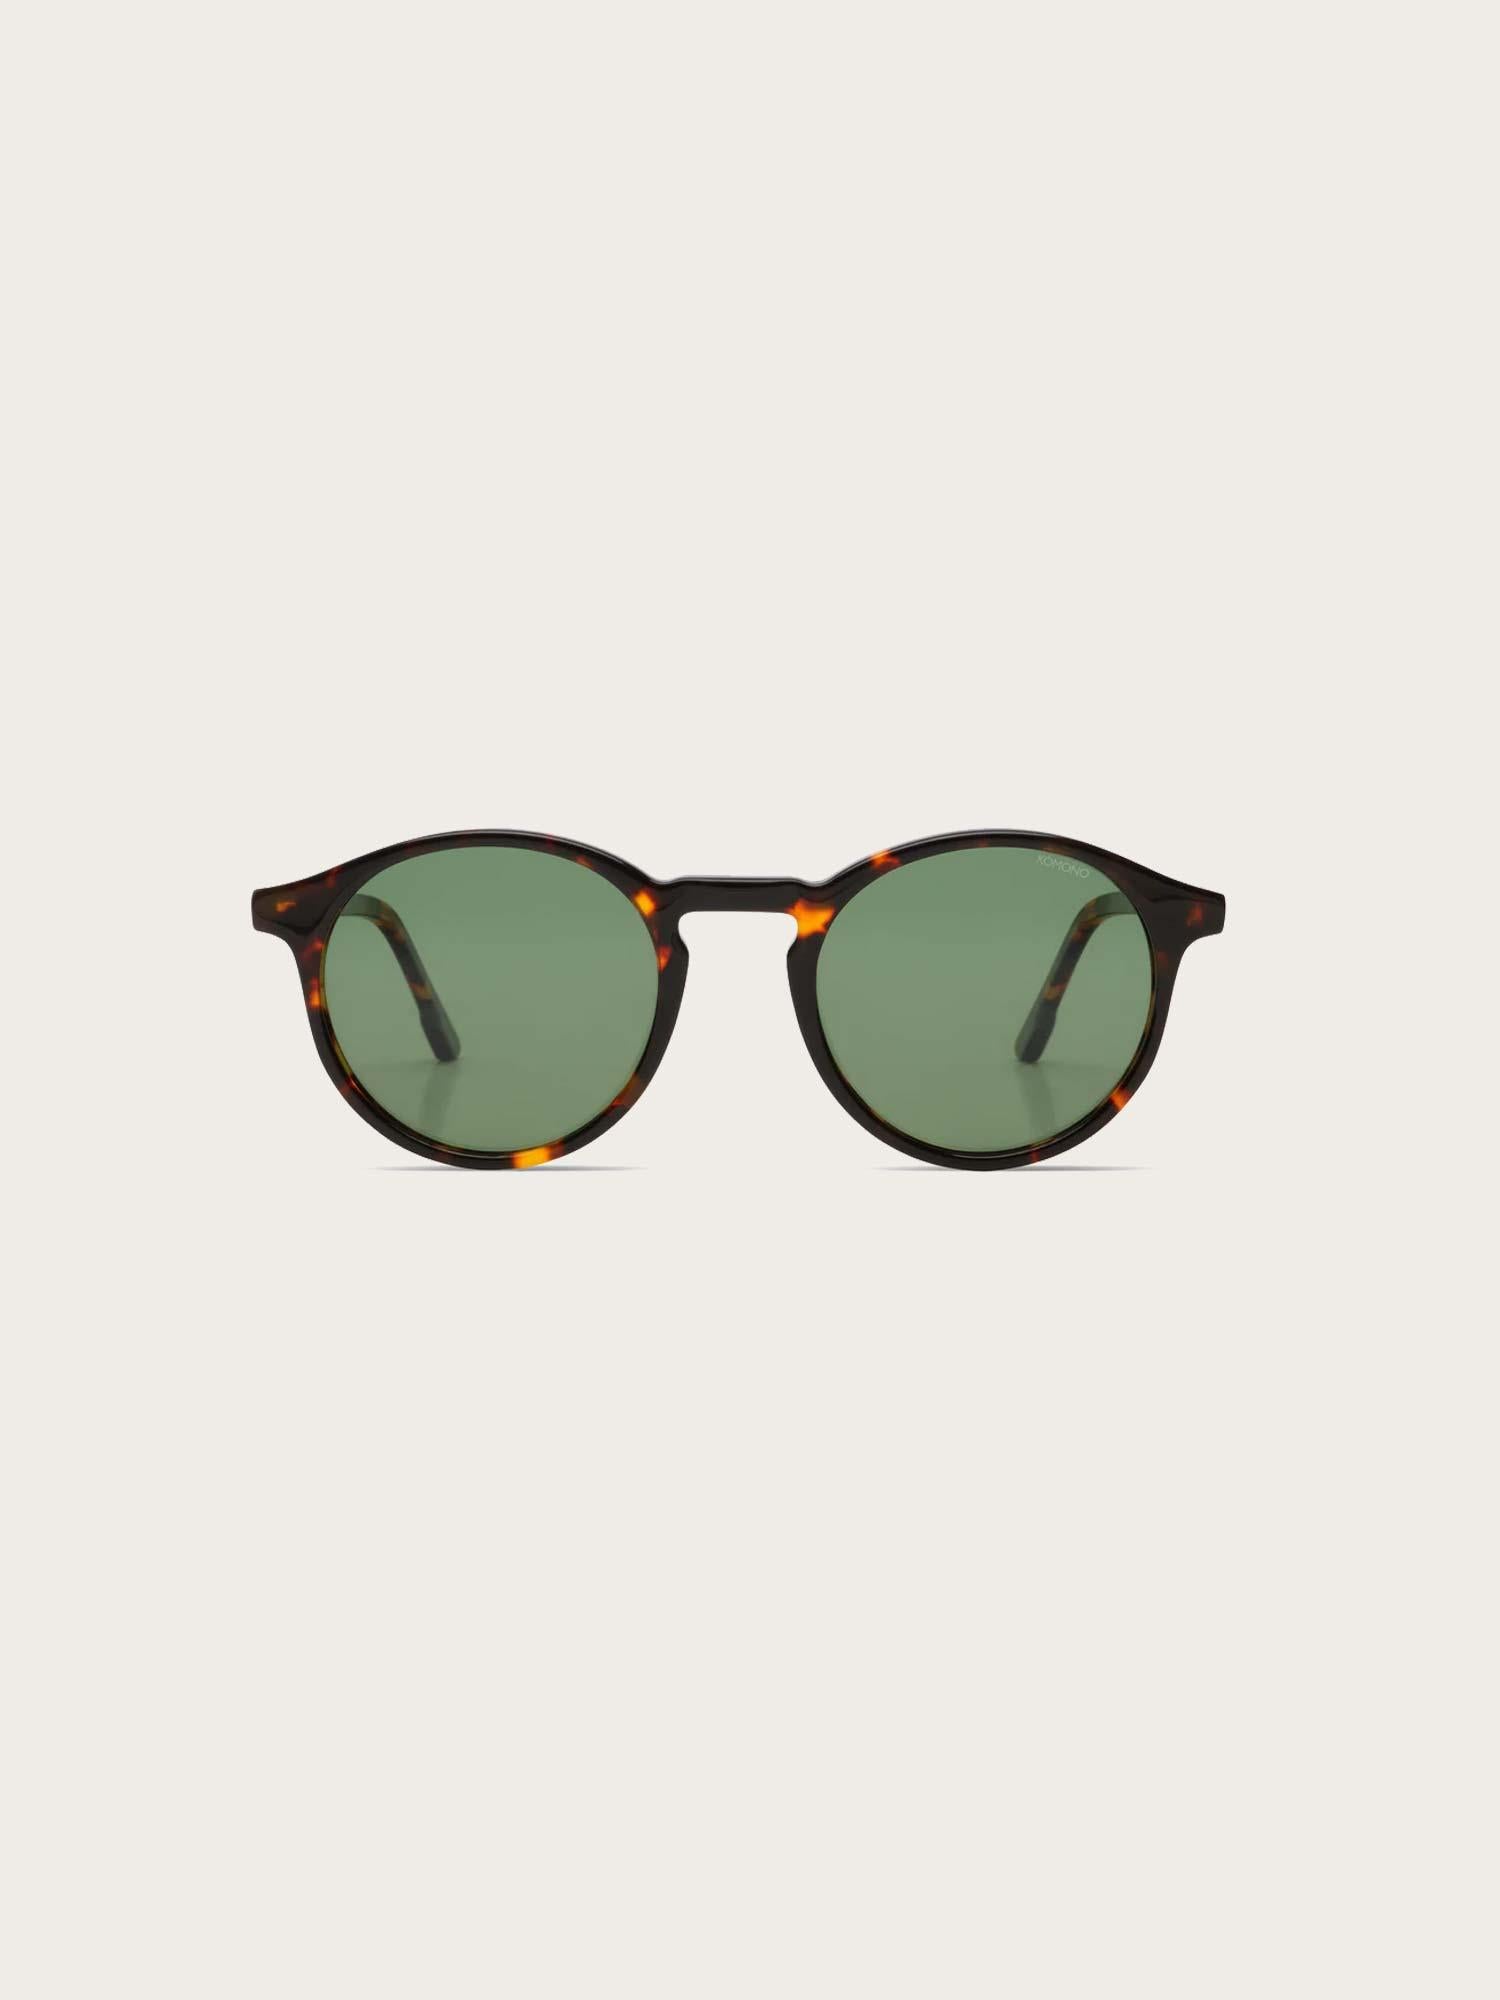 Archie Sunglasses - Grand Tortoise